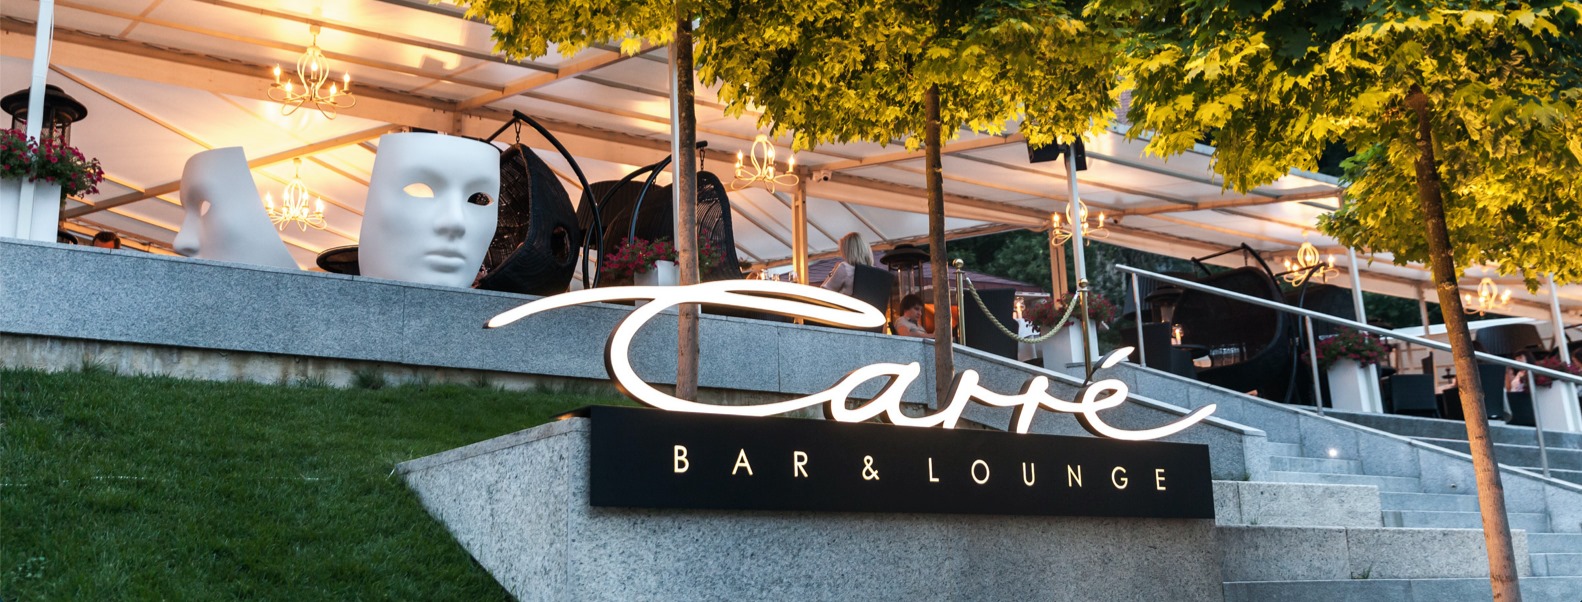 Carre Bar & Lounge (1)